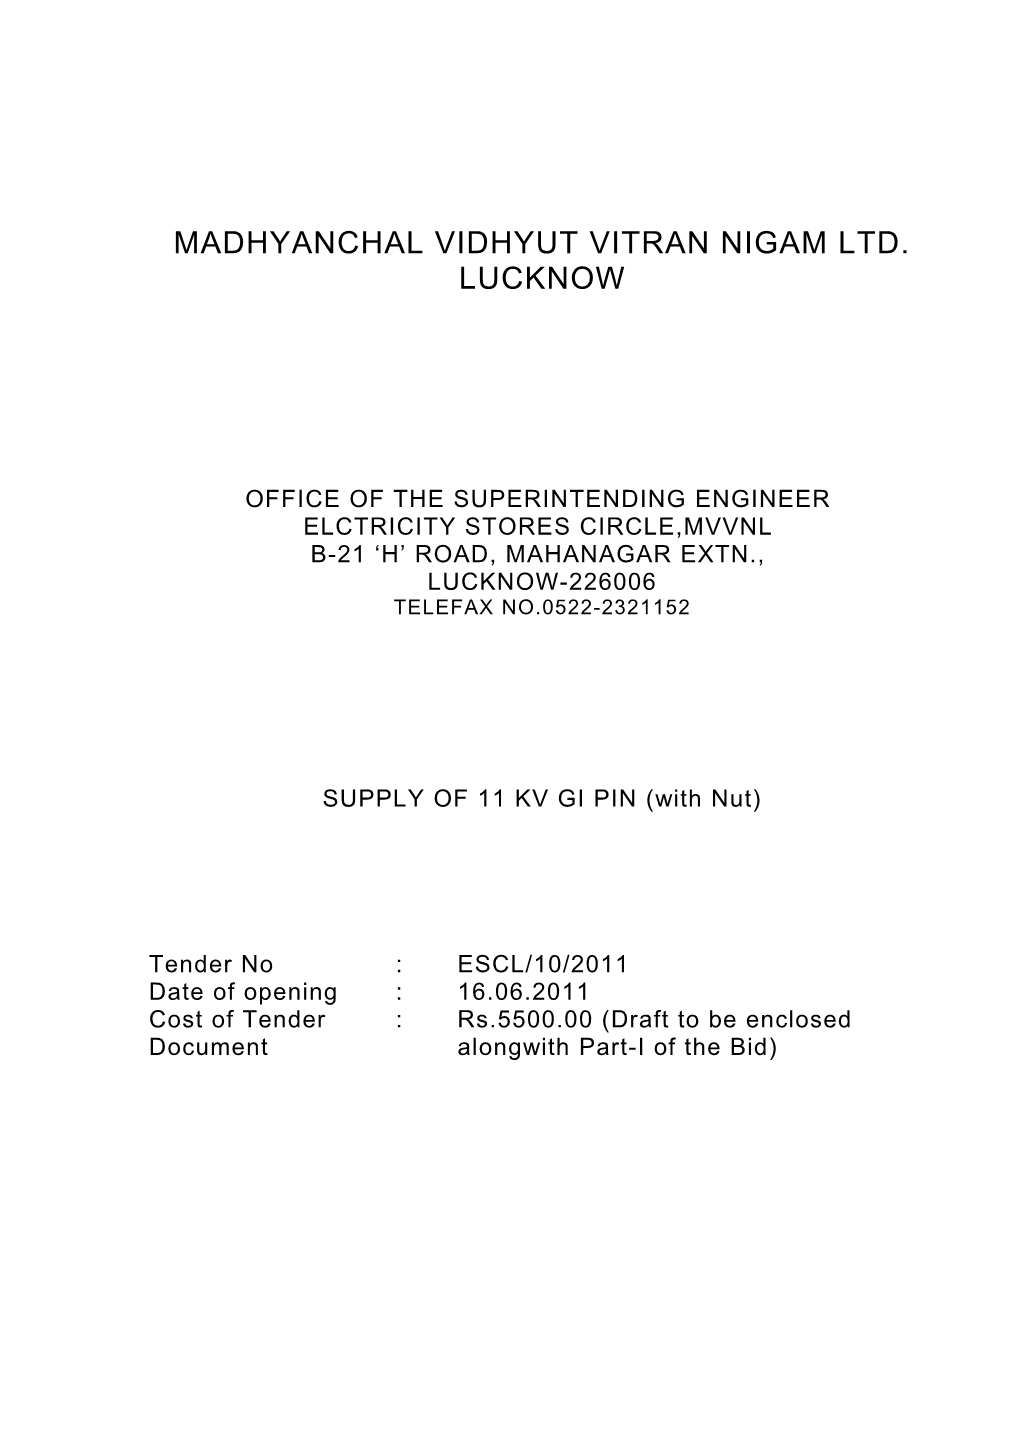 Madhyanchal Vidhyut Vitran Nigam Ltd. Lucknow